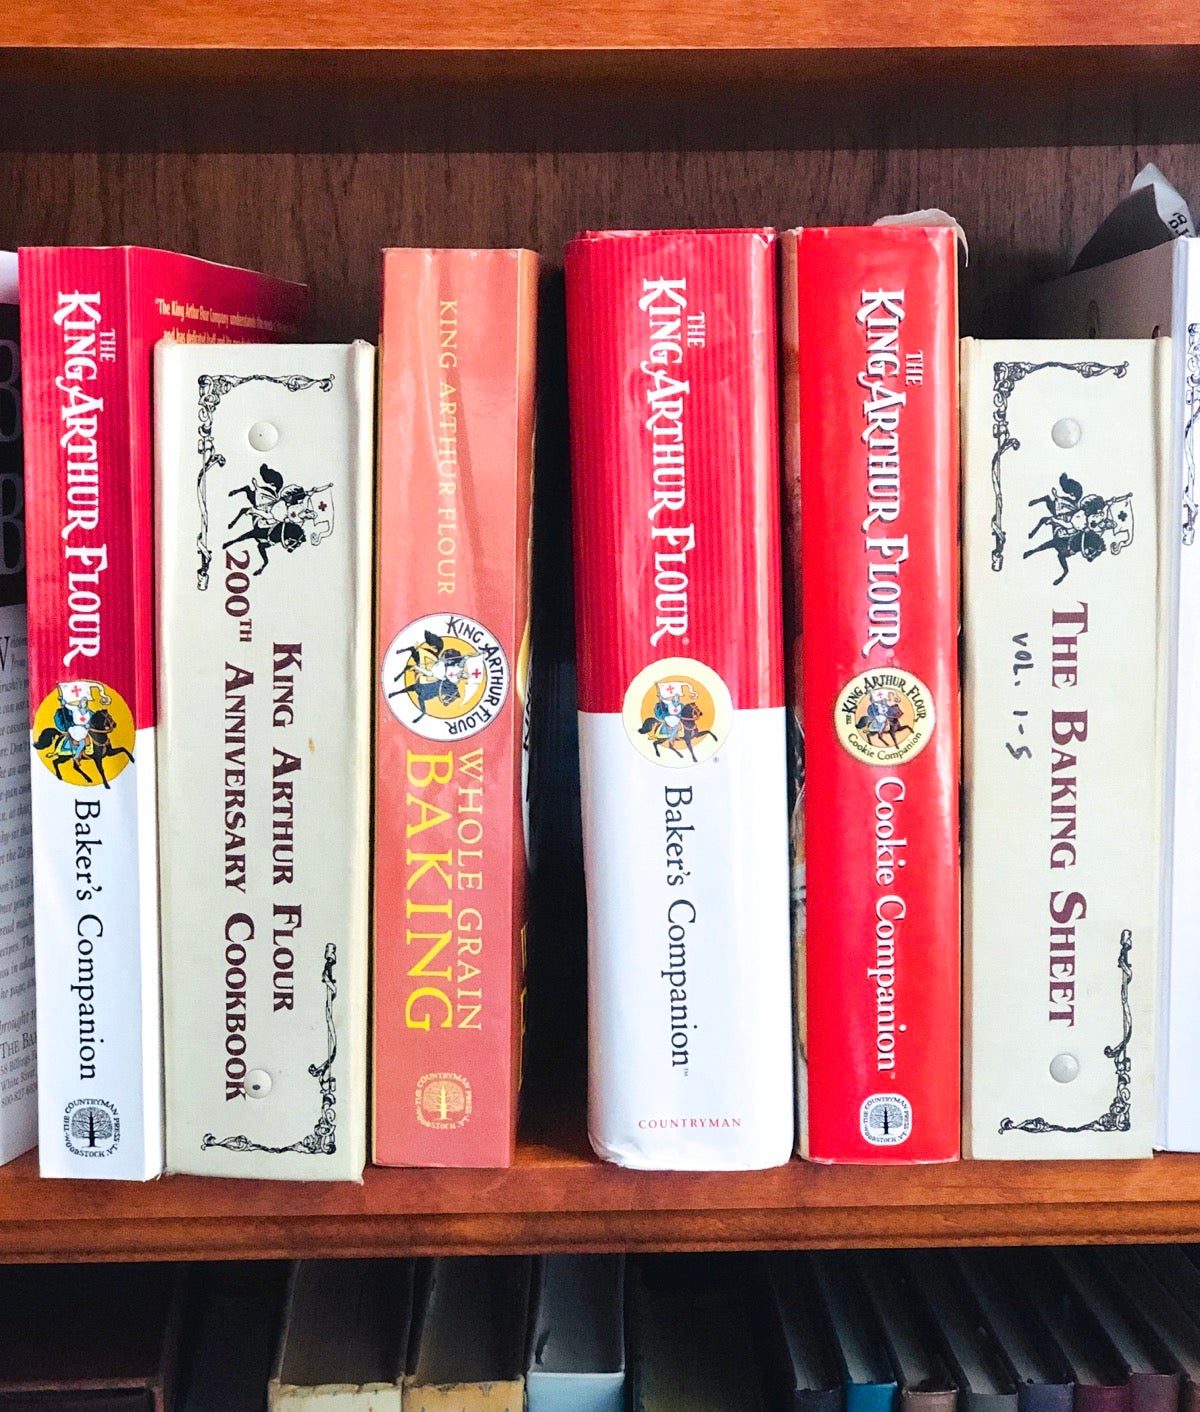 King Arthur cookbooks on a shelf.